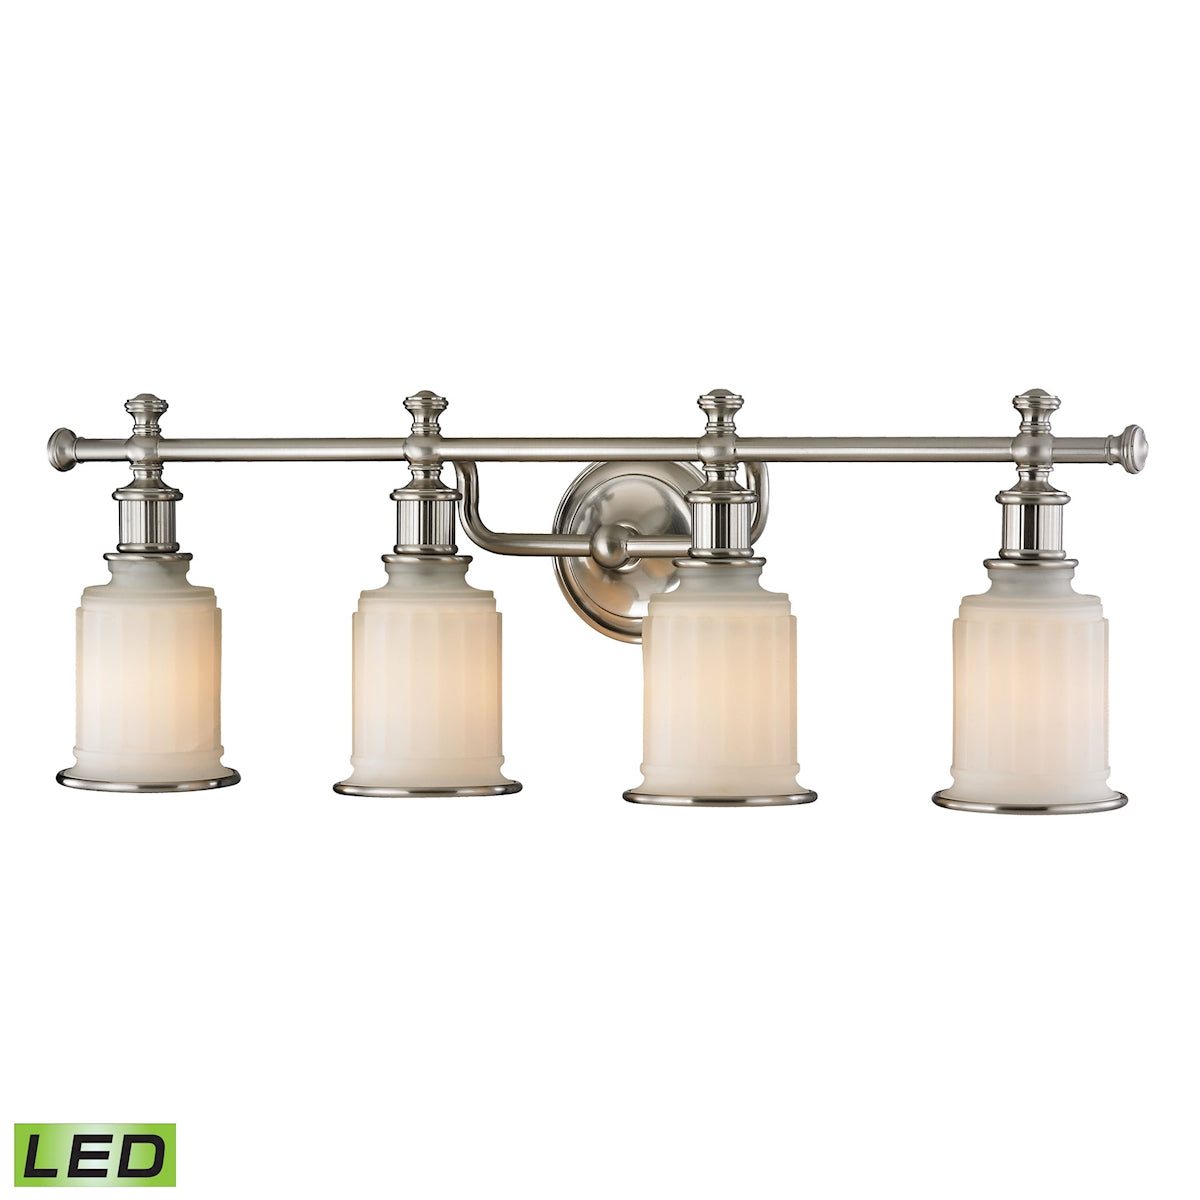 ELK Lighting 52003/4-LED Acadia 4-Light Vanity Lamp in Brushed Nickel with Opal Reeded Pressed Glass - Includes LED Bulbs